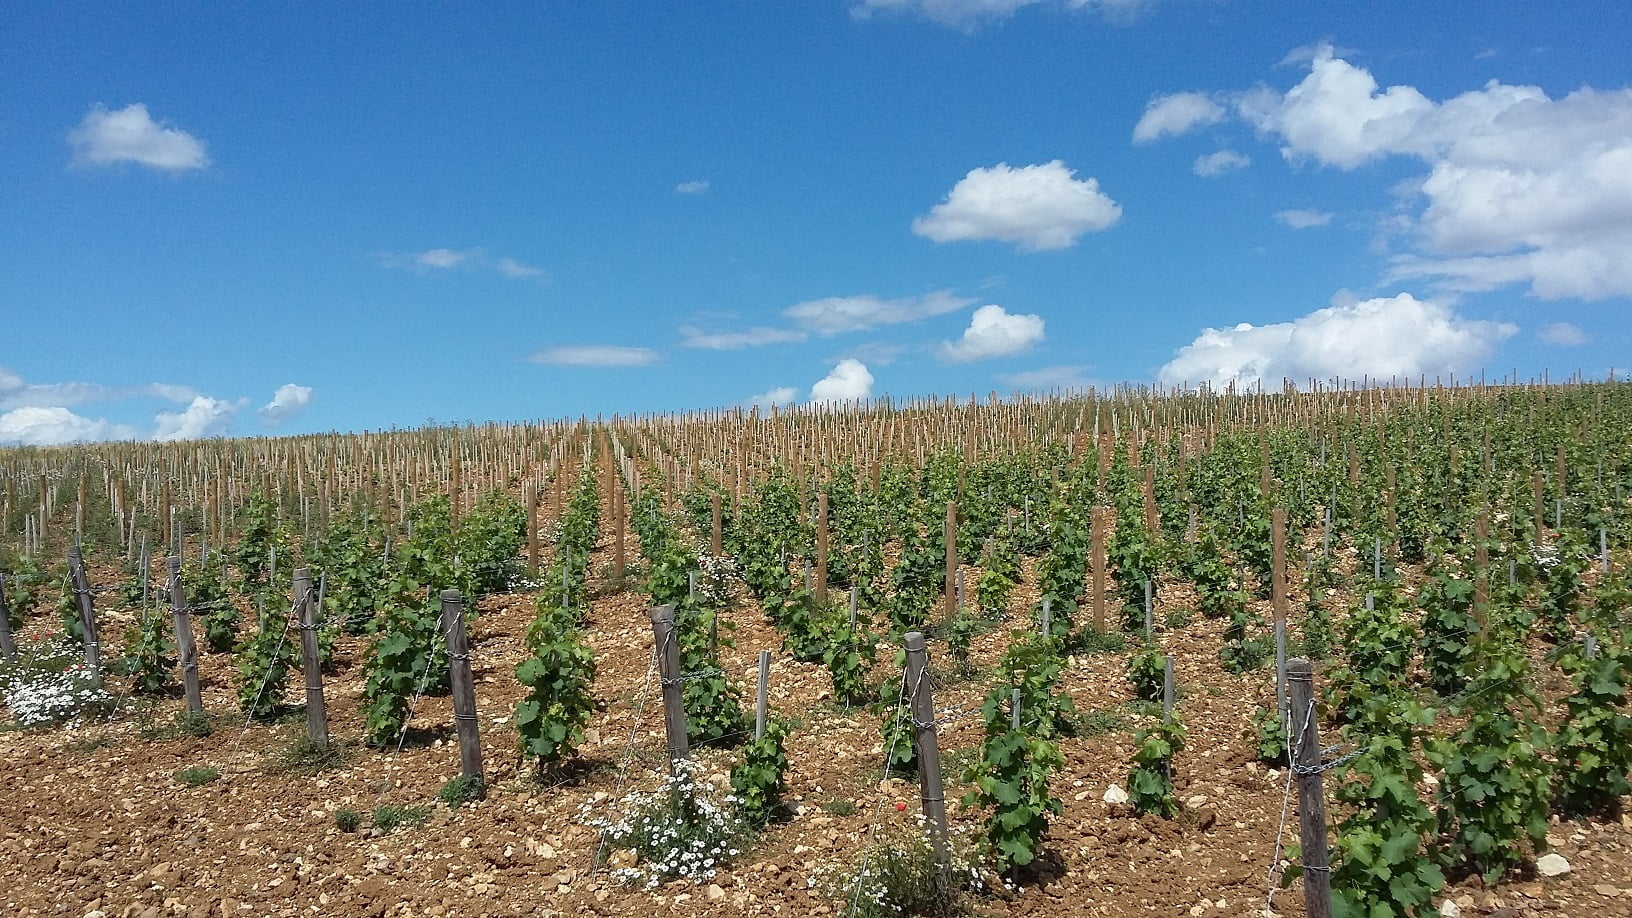 Loire researchers arm Sauvignon wine growers for the future